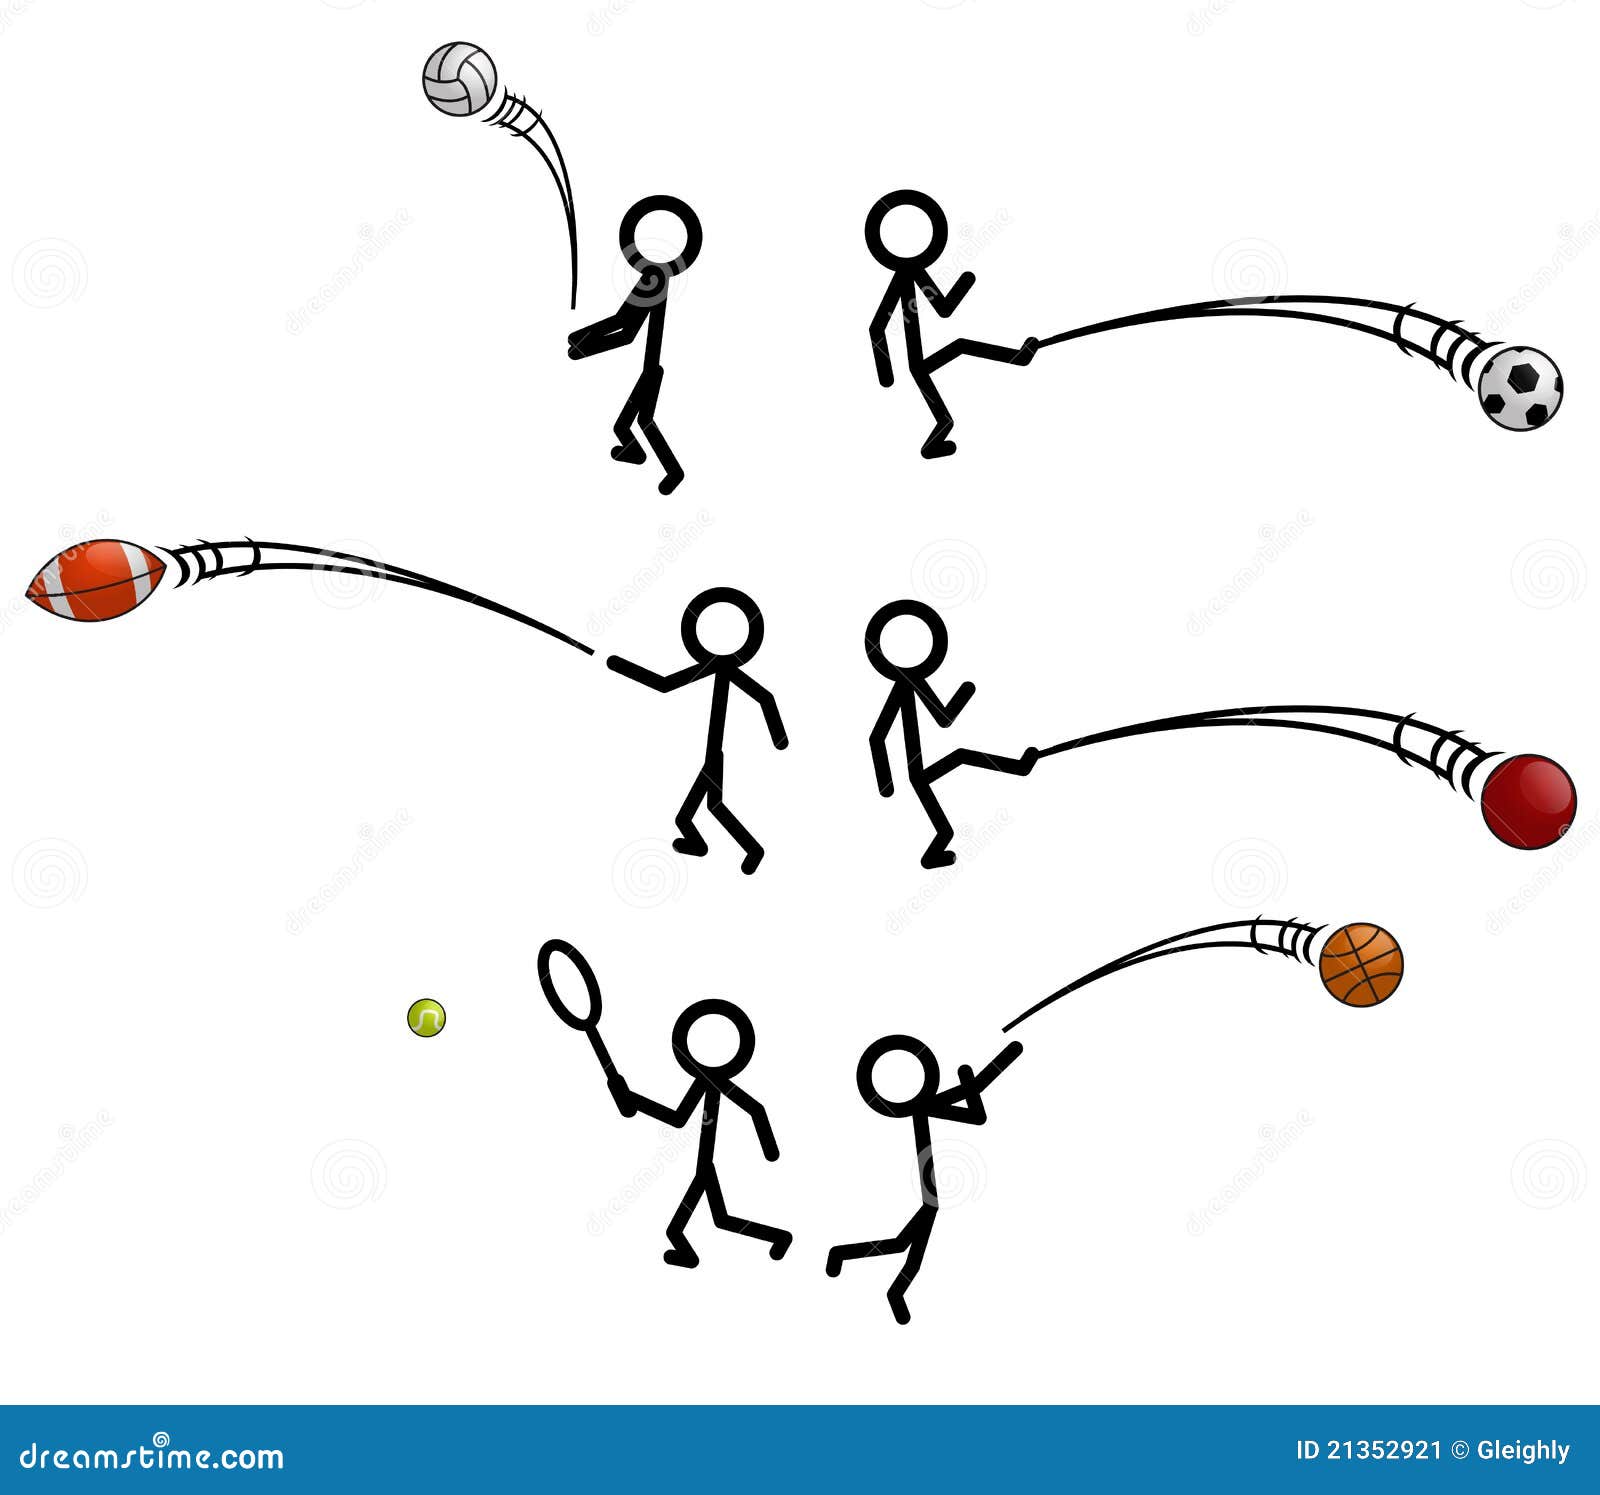 Stickman Sports Badminton - 2 Player Games